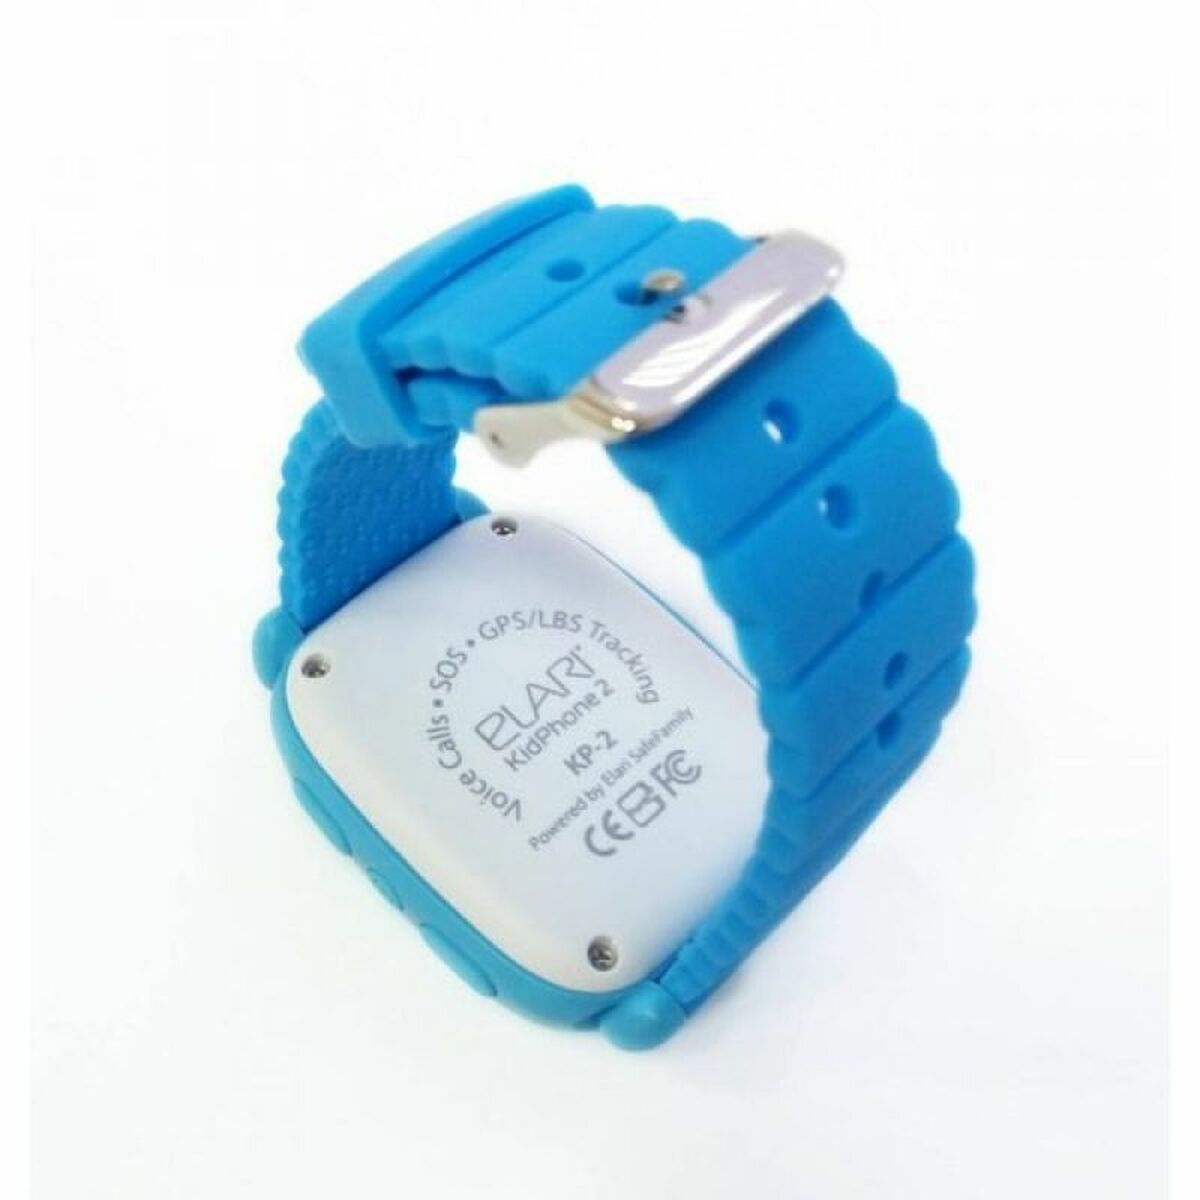 Smartwatch ELAKPHONE2A Blau 1,44" - CA International  